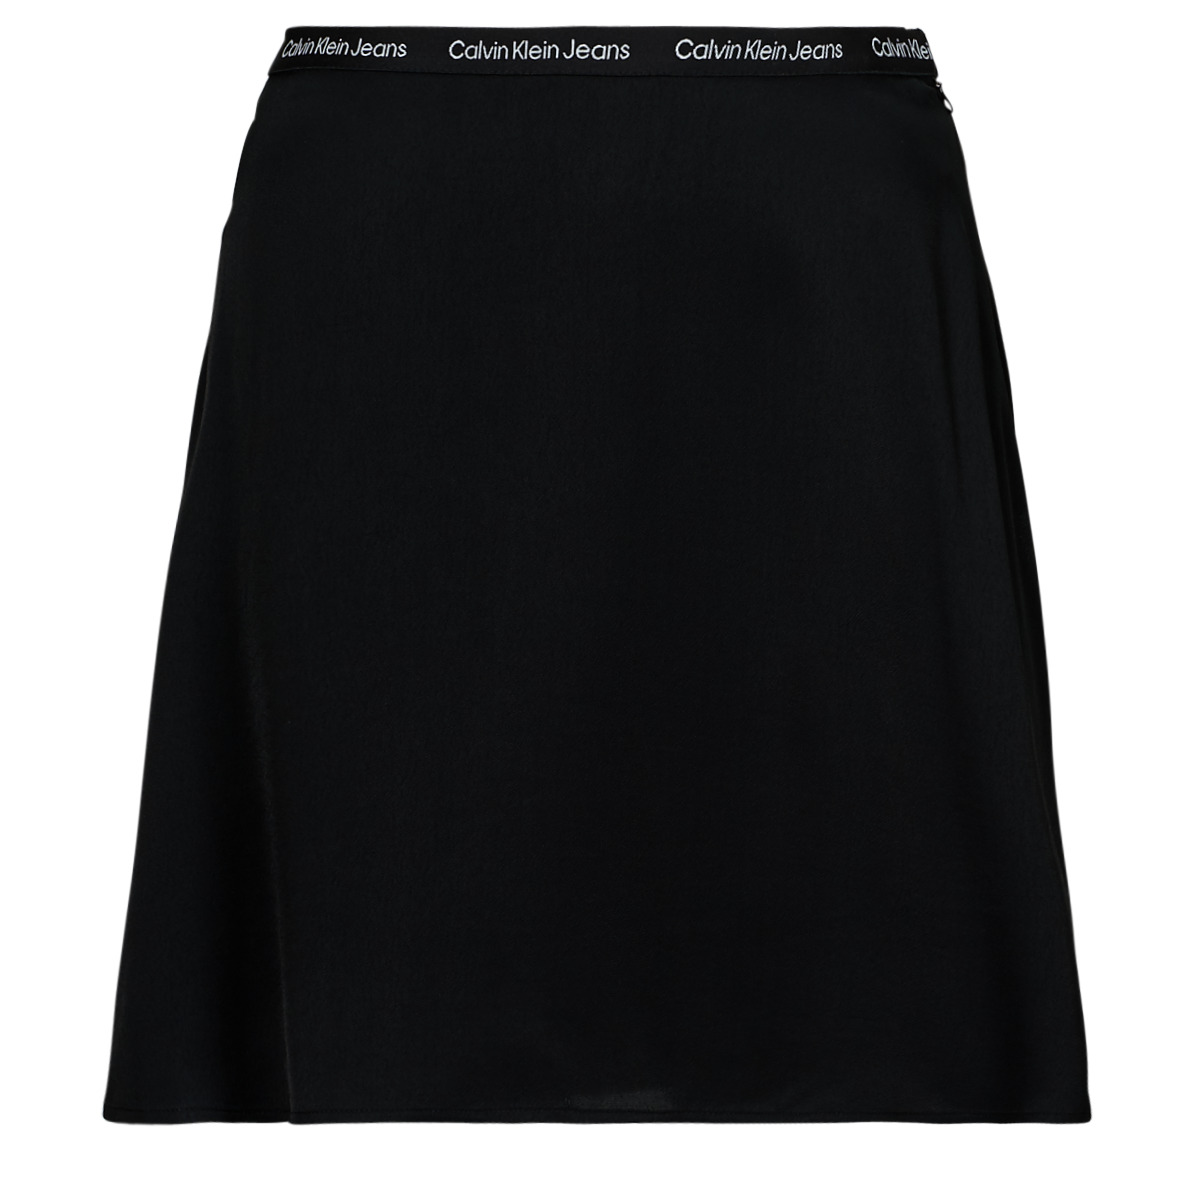 Textil Ženy Sukně Calvin Klein Jeans LOGO ELASTIC SKIRT Černá